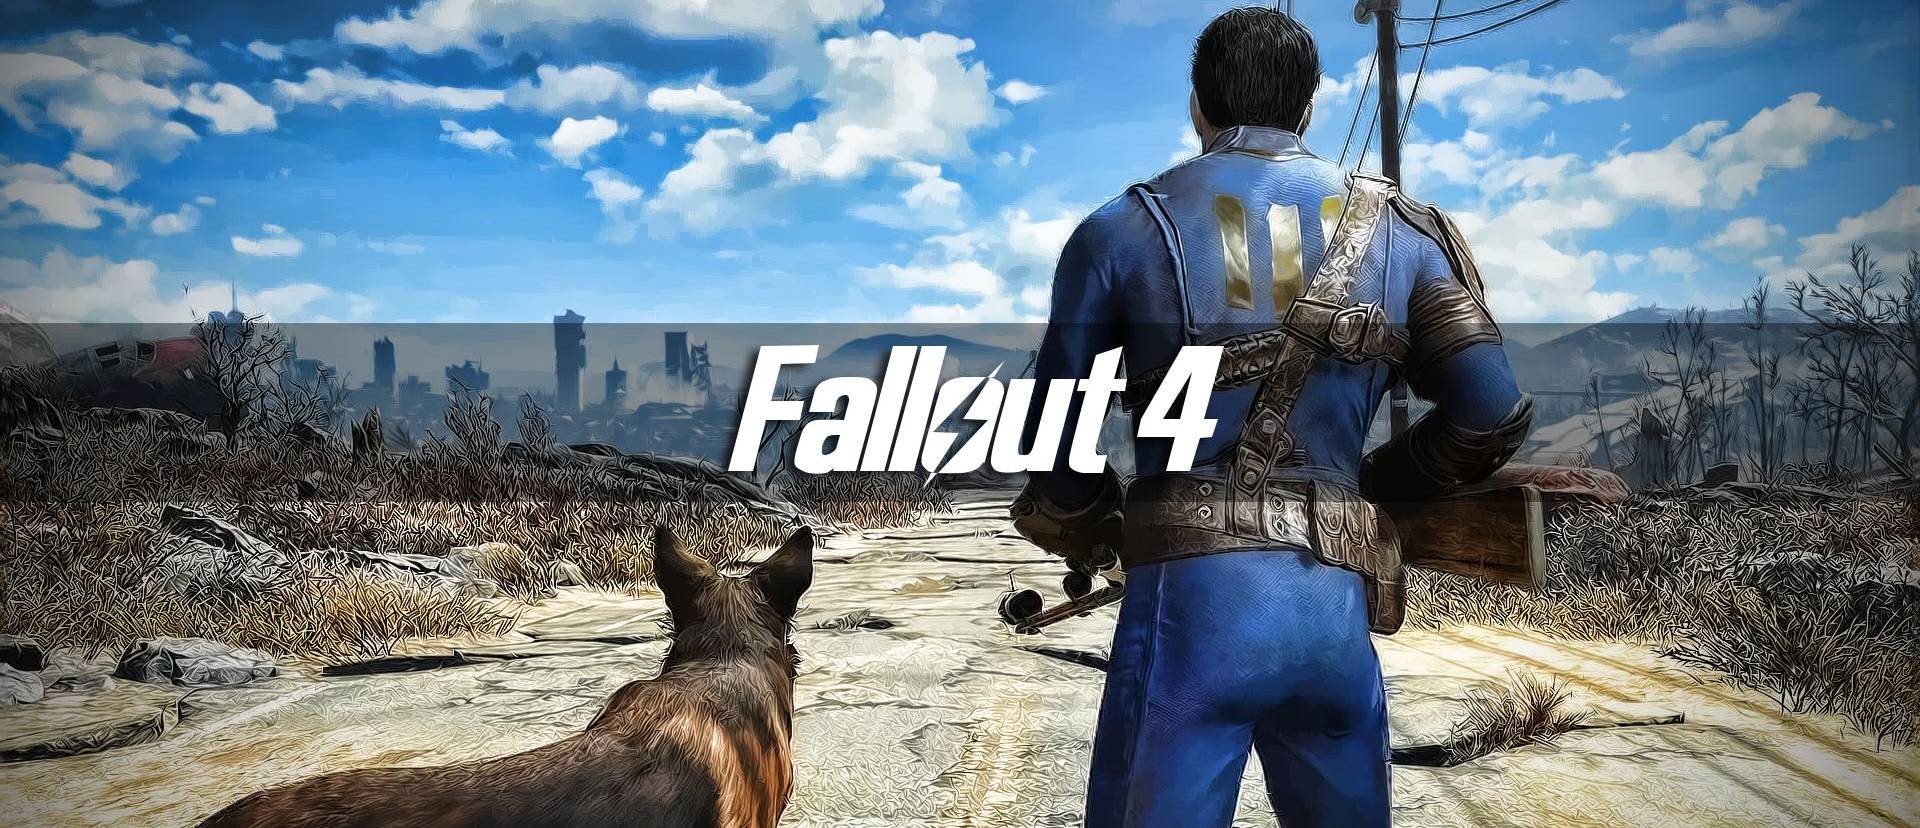 Megérkezett a Fallout 4 Launch trailer